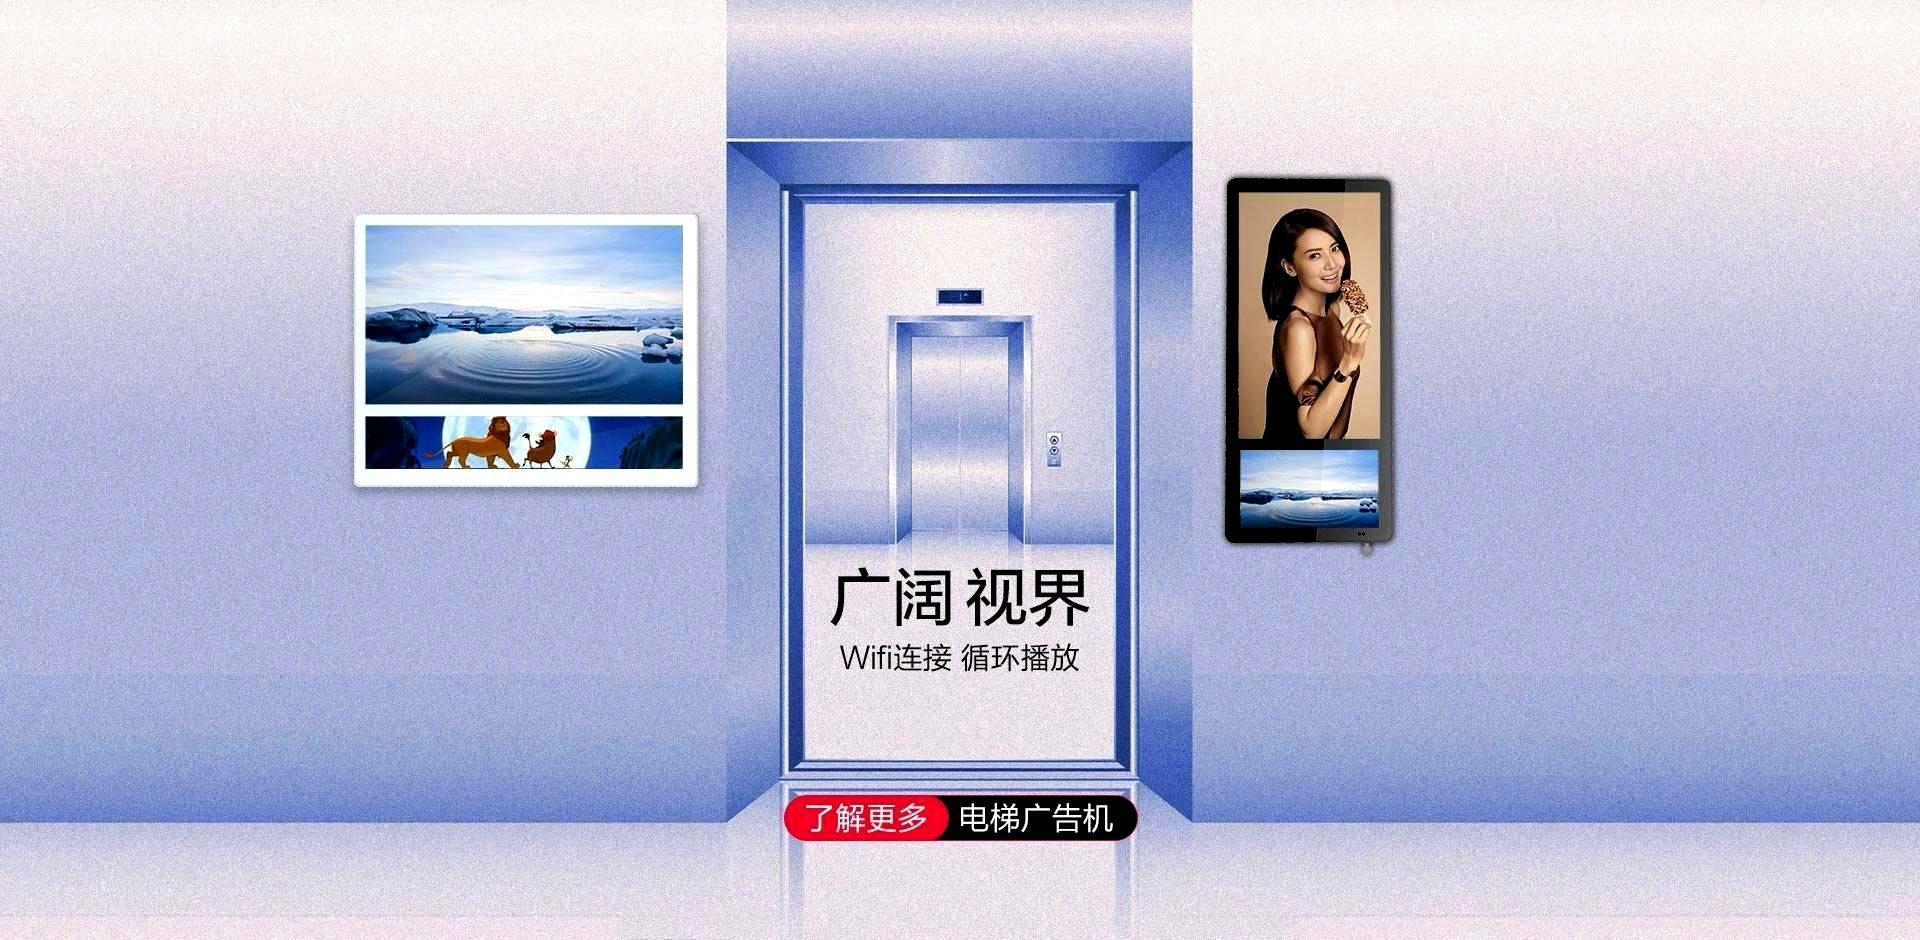 Elevator Advertising Machine